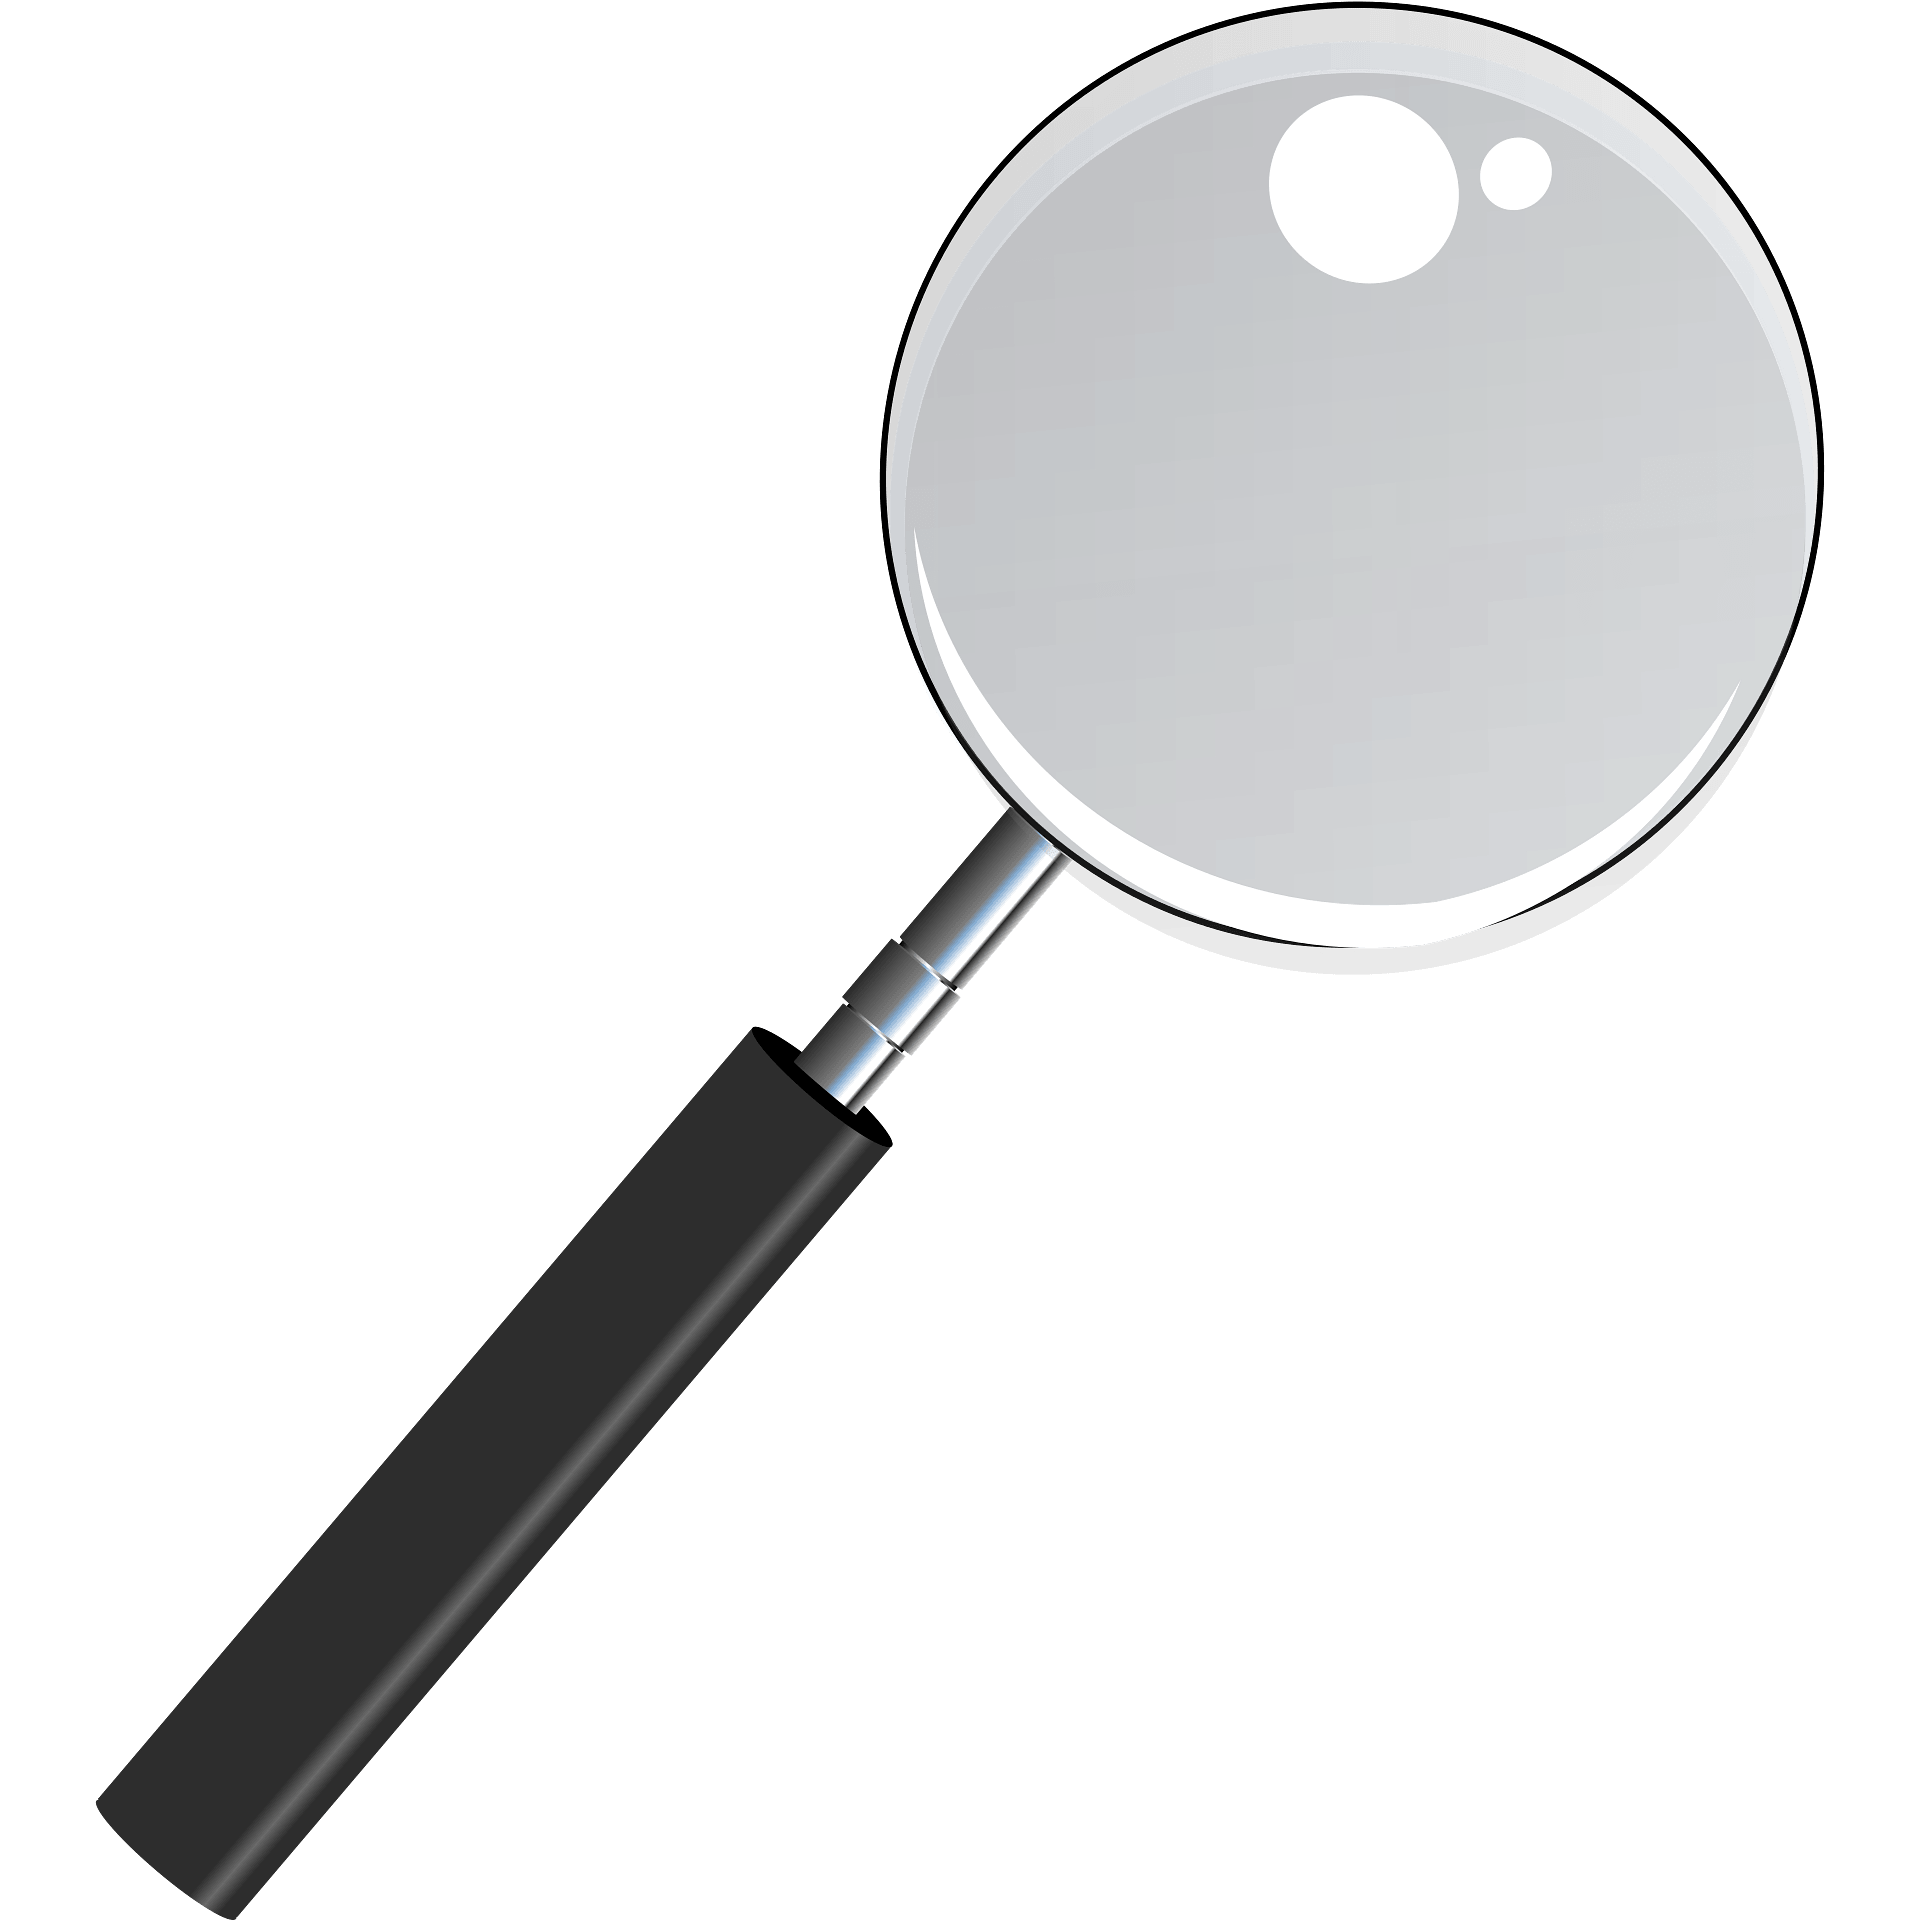 File:Magnifying glass icon mgx2.svg - Wikipedia